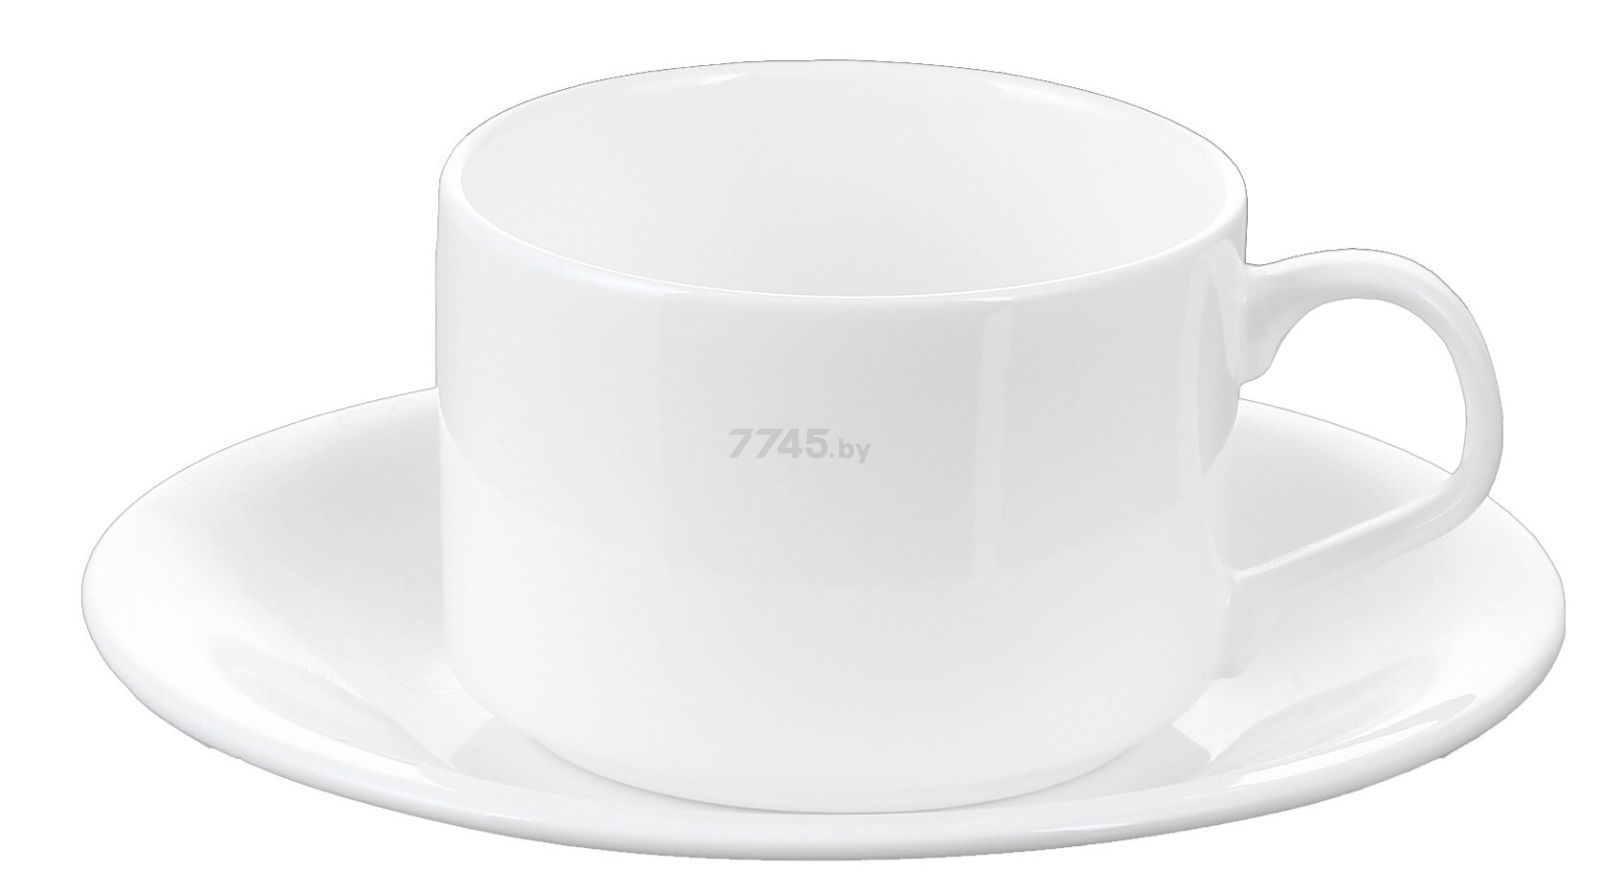 Чашка с блюдцем фарфоровая WILMAX 160 мл (WL-993006/AB)